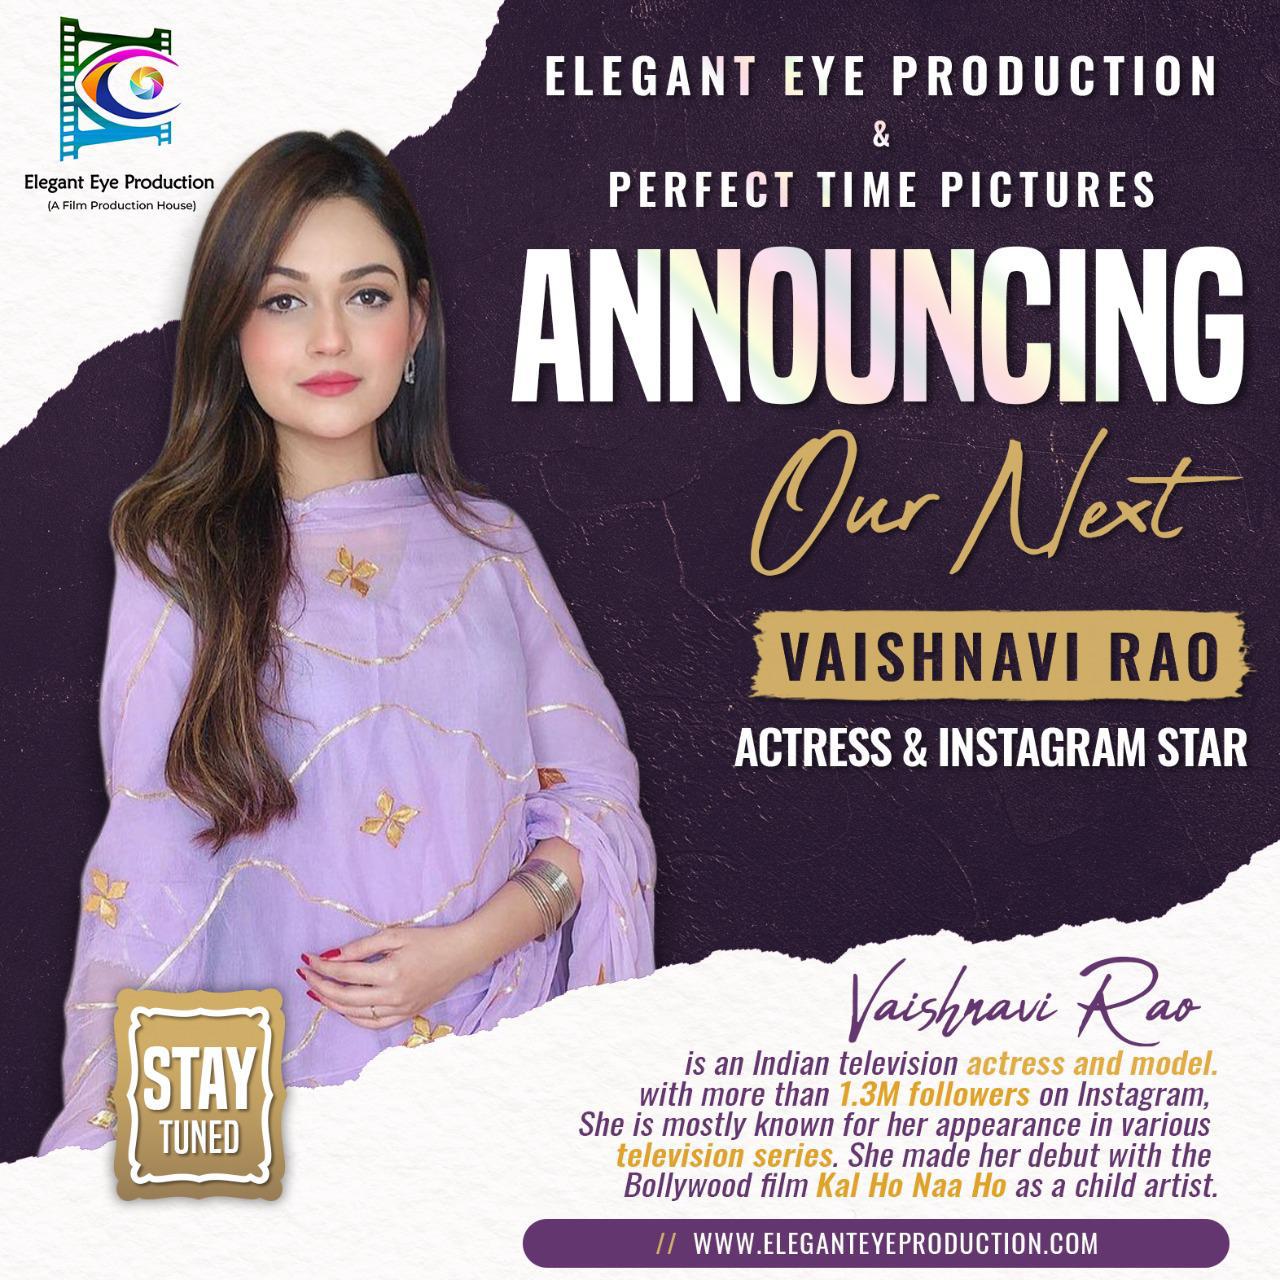 Announcing Our Next - Vaishnavi Rao